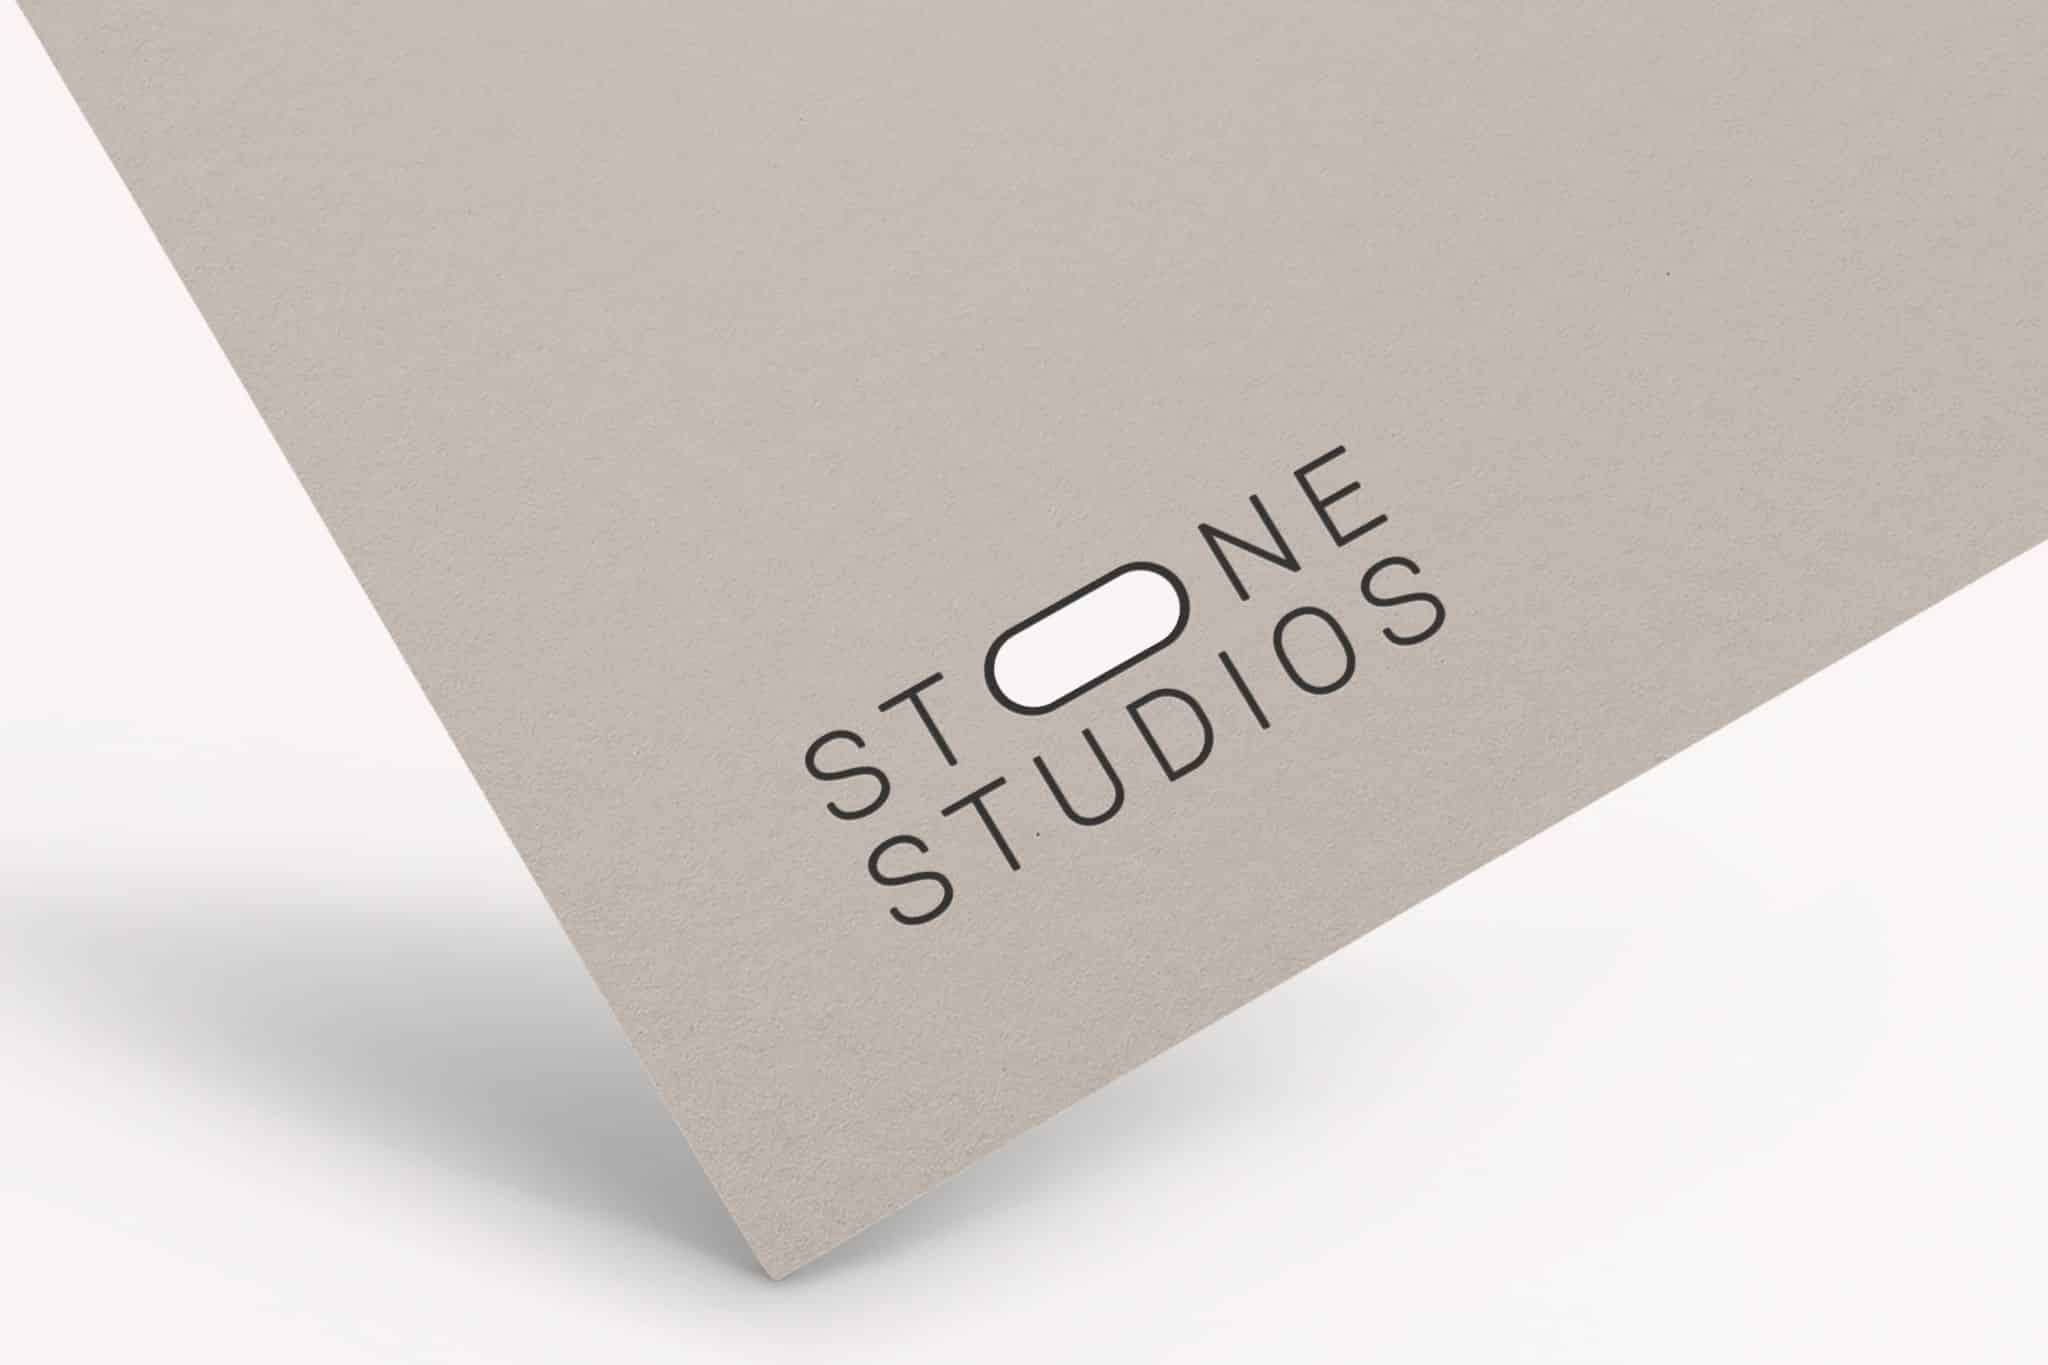 Stone studios social media management misfits digital 3